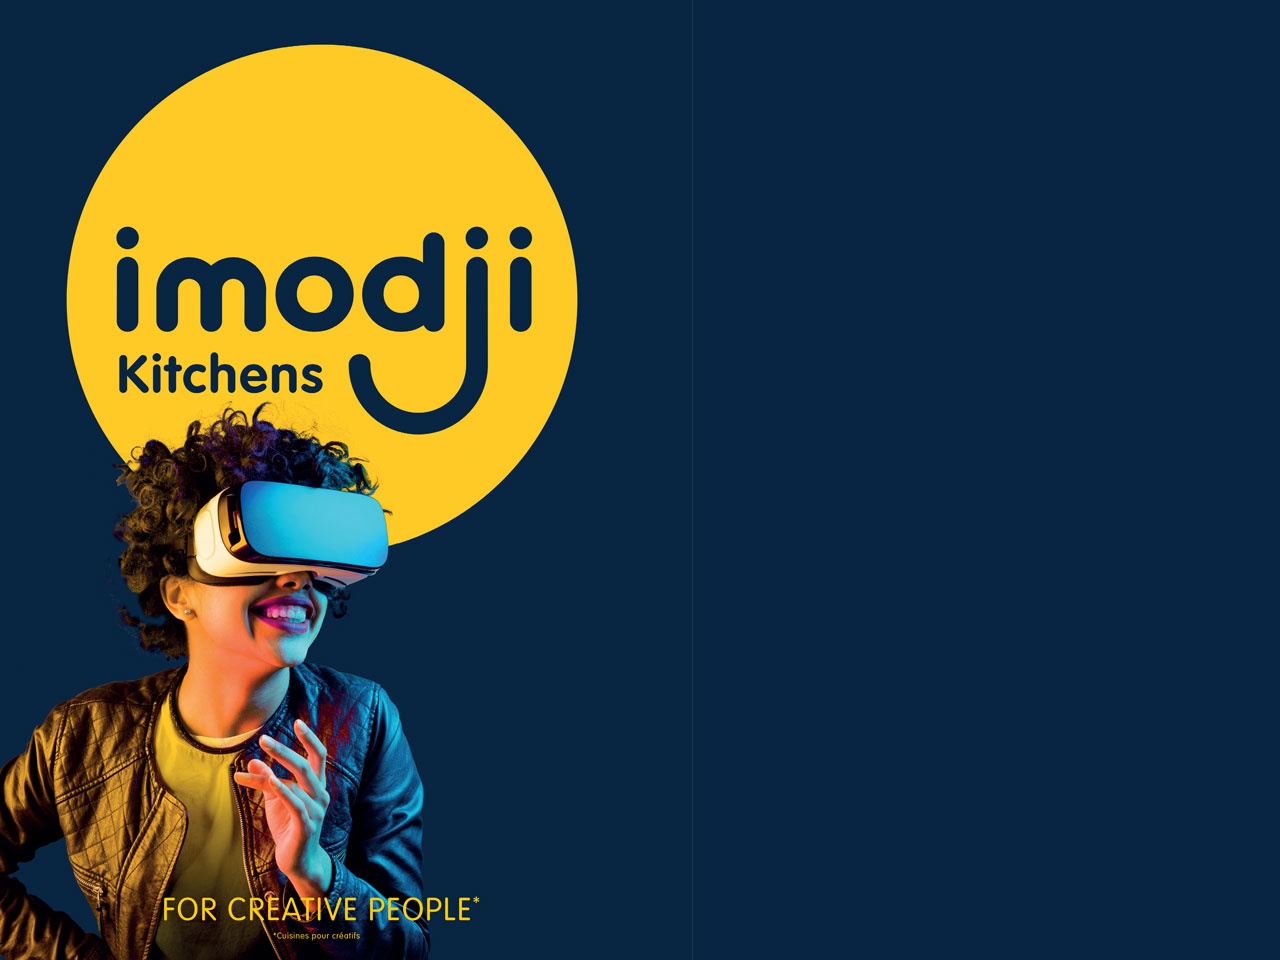 Imodji Kitchens : une enseigne urbaine aux codes des « Digital Natives »